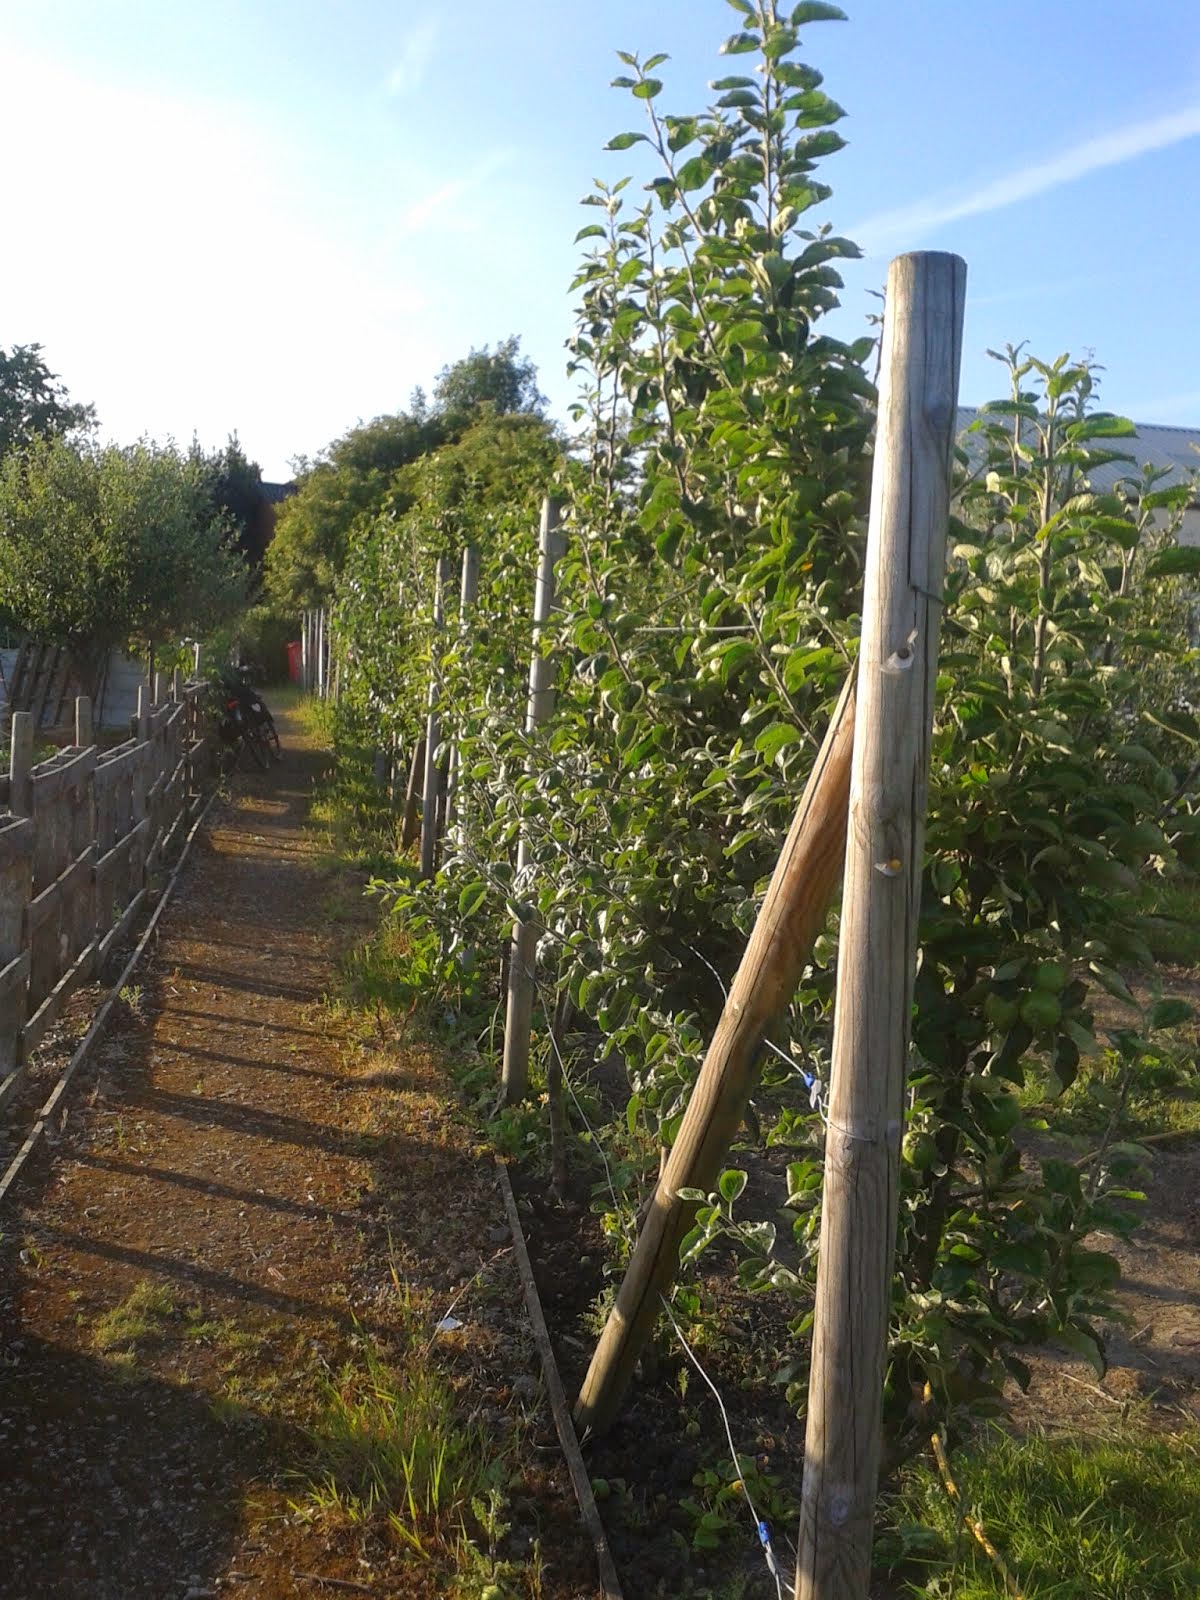 The orchard plot